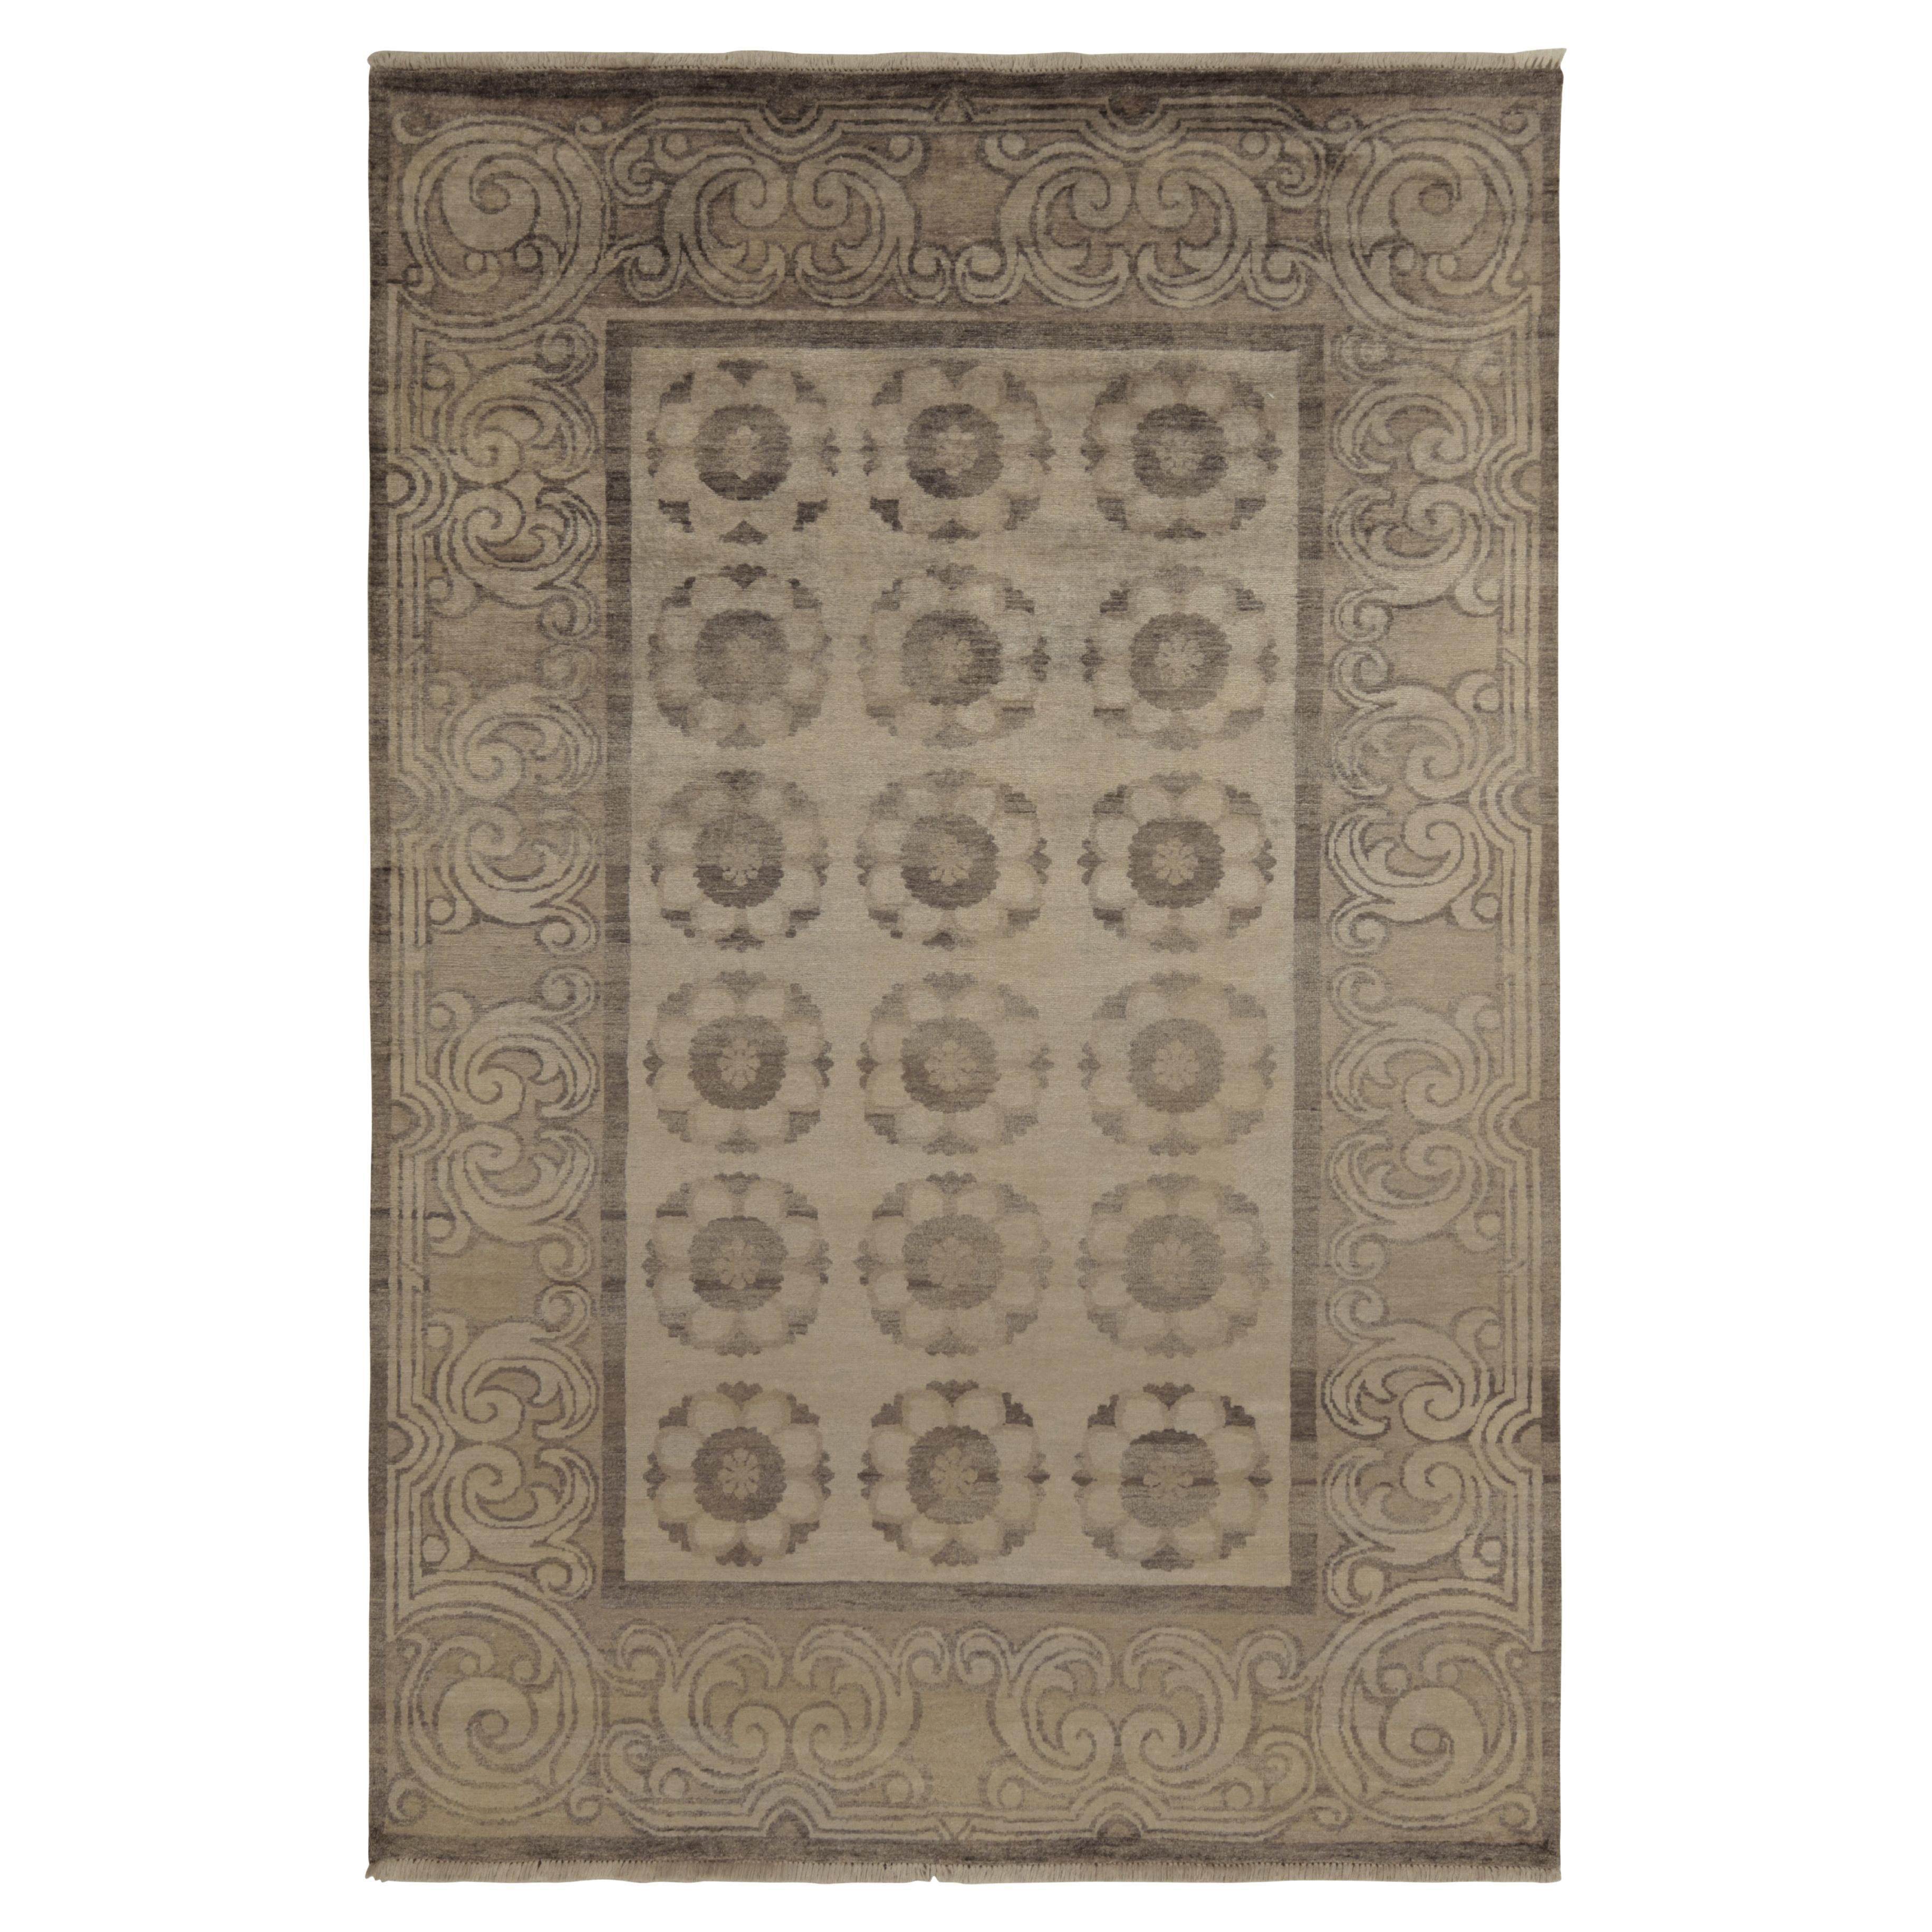 Rug & Kilim’s Arts & Crafts style rug in Beige-Brown Medallion Patterns For Sale